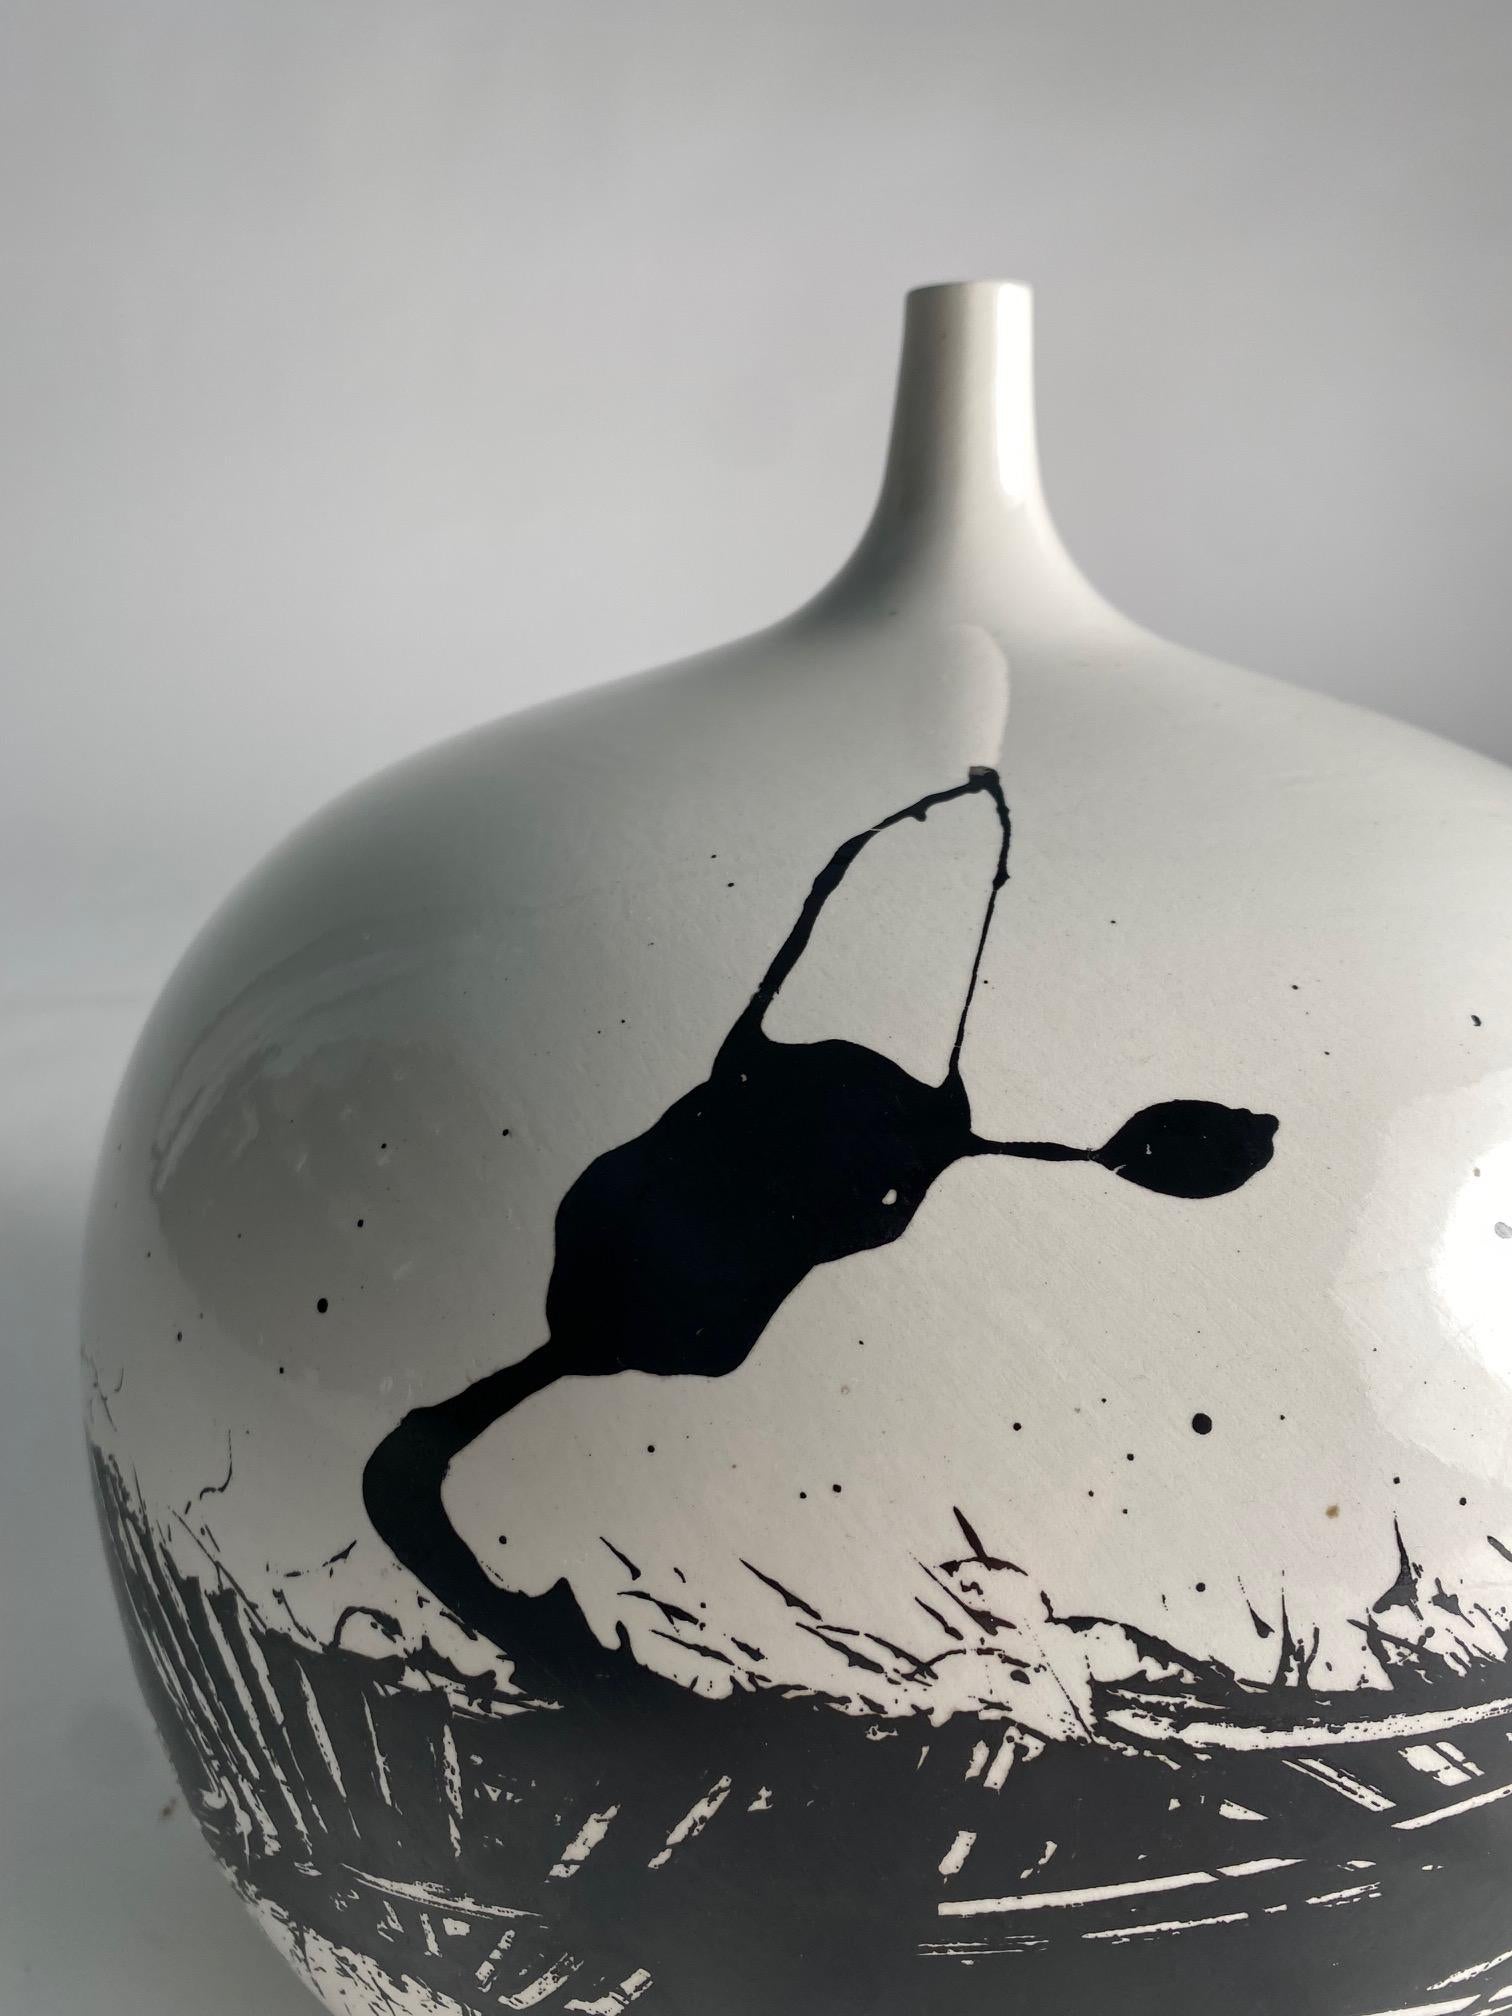 Mid-Century Modern Glazed Ceramic Vase by Emilio Scanavino (Signed), Italy 1970s For Sale